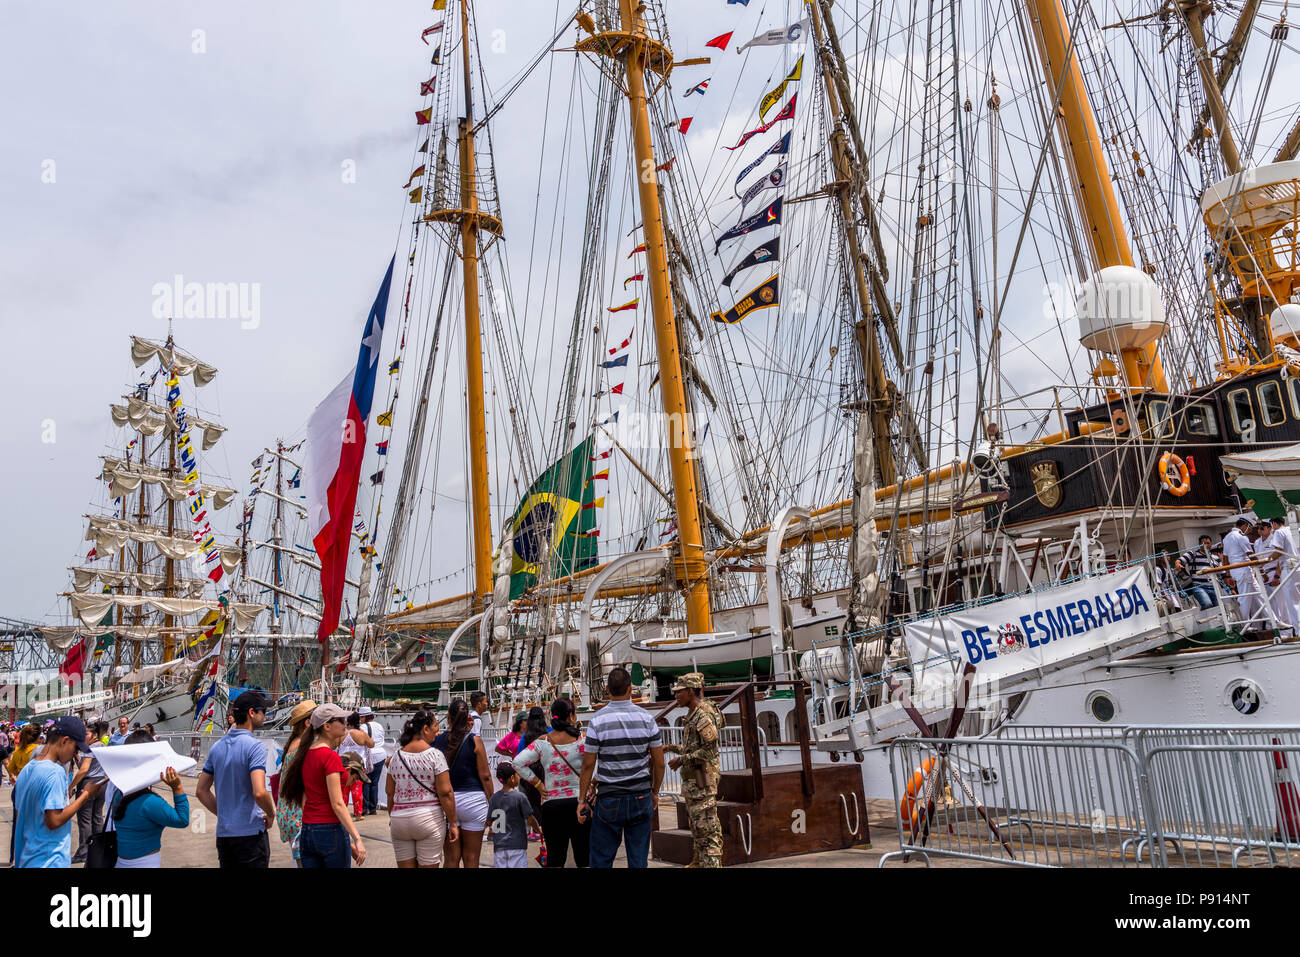 Sailing School Vessels in Panama Balboa Port at Velas Latinoamerica 2018 regata Stock Photo